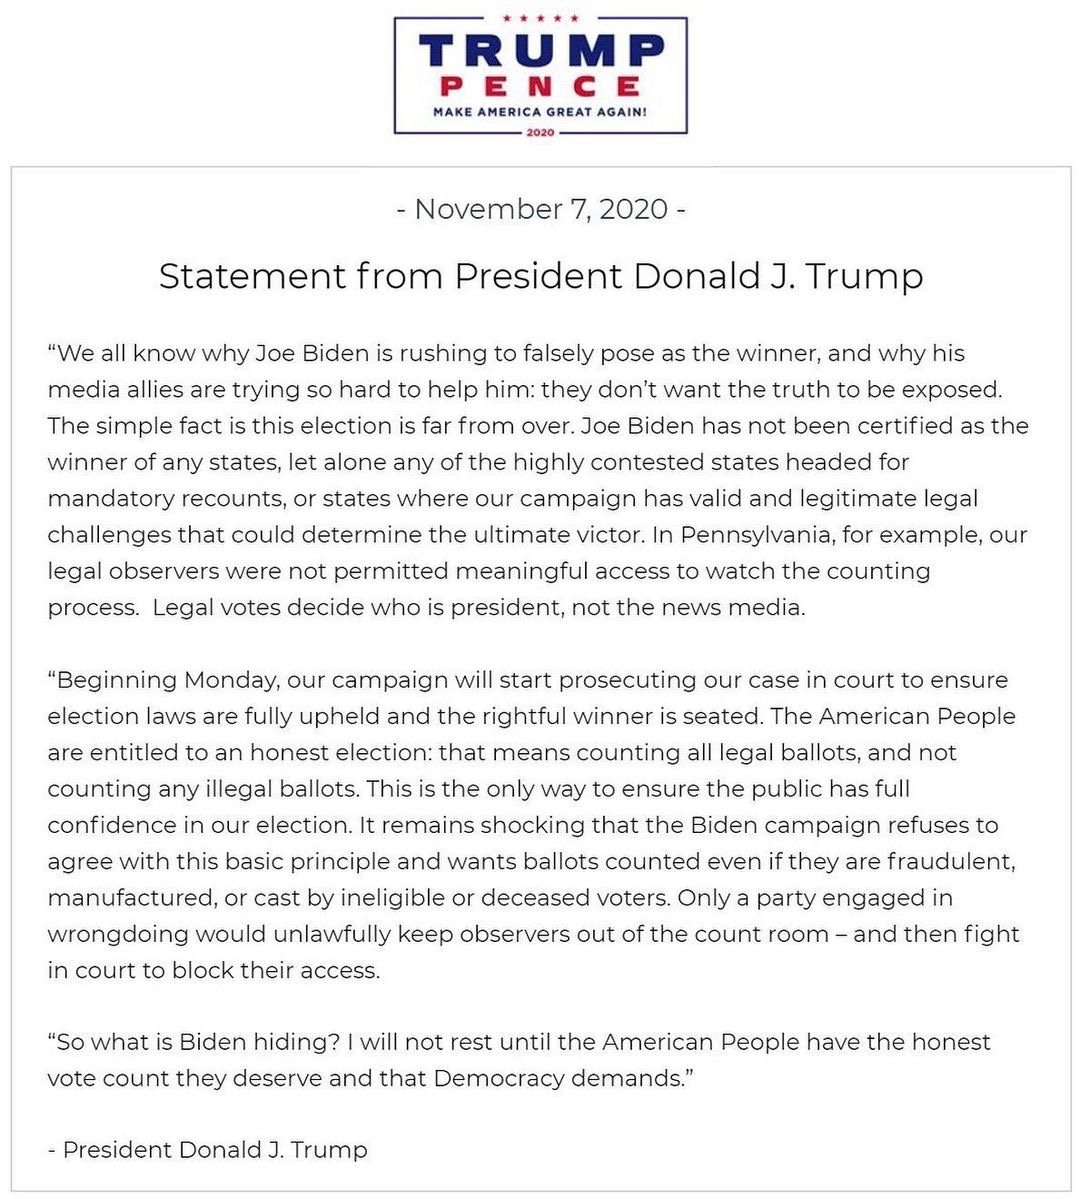 Statement from Donald J. Trump